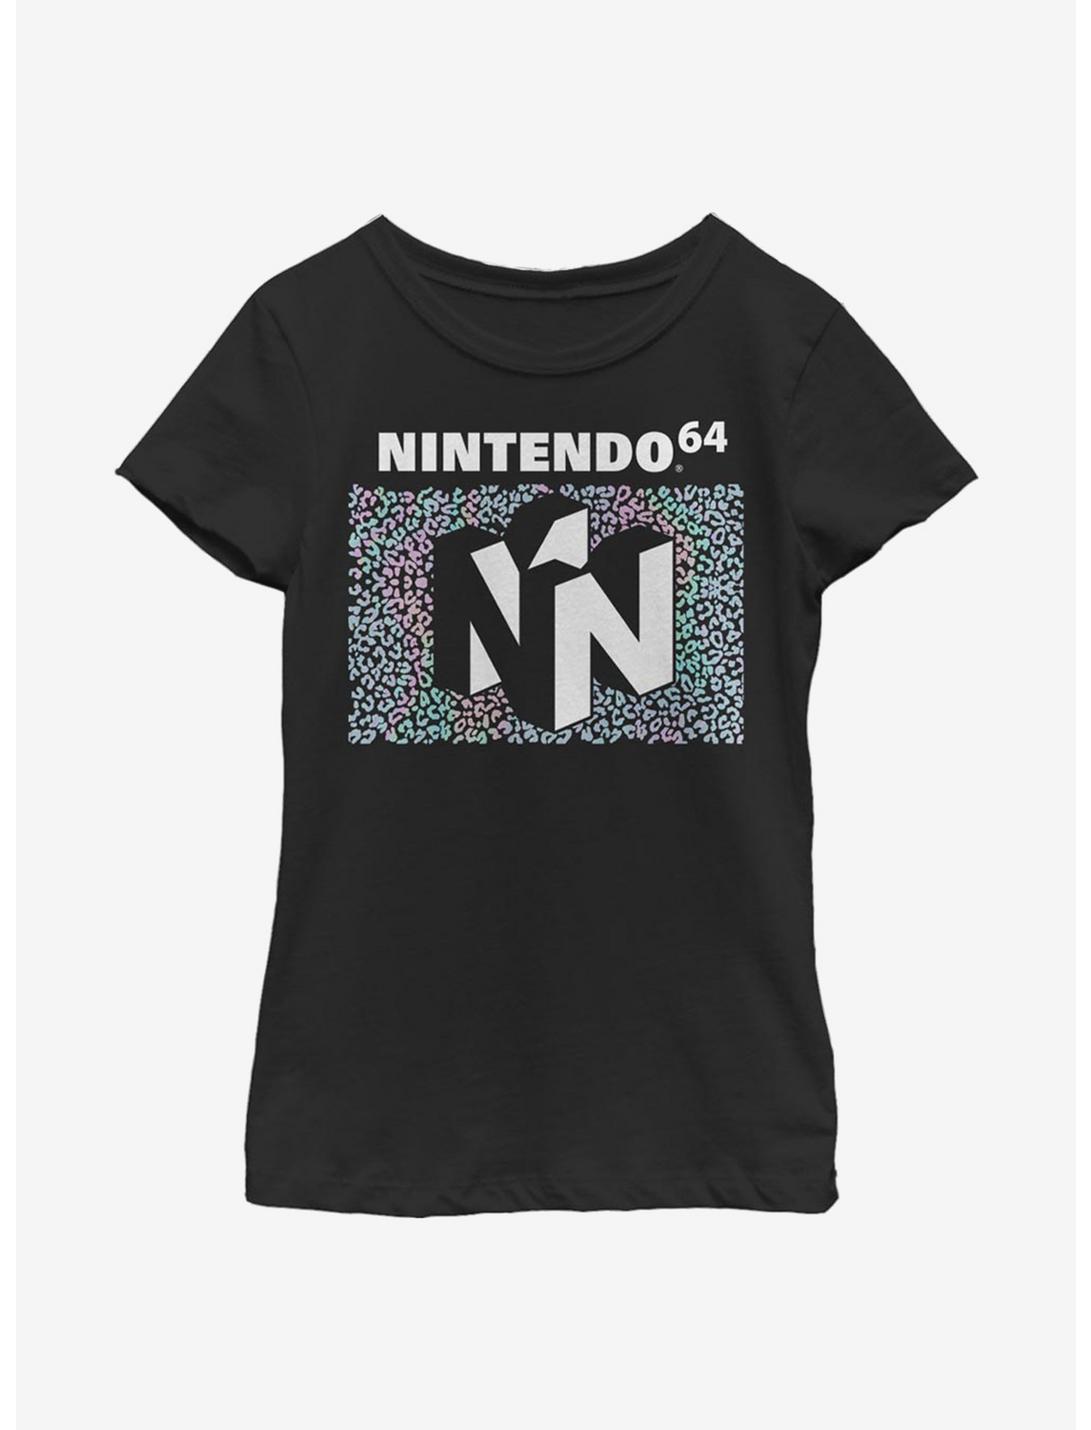 Nintendo Holo Cheetah Youth Girls T-Shirt, BLACK, hi-res